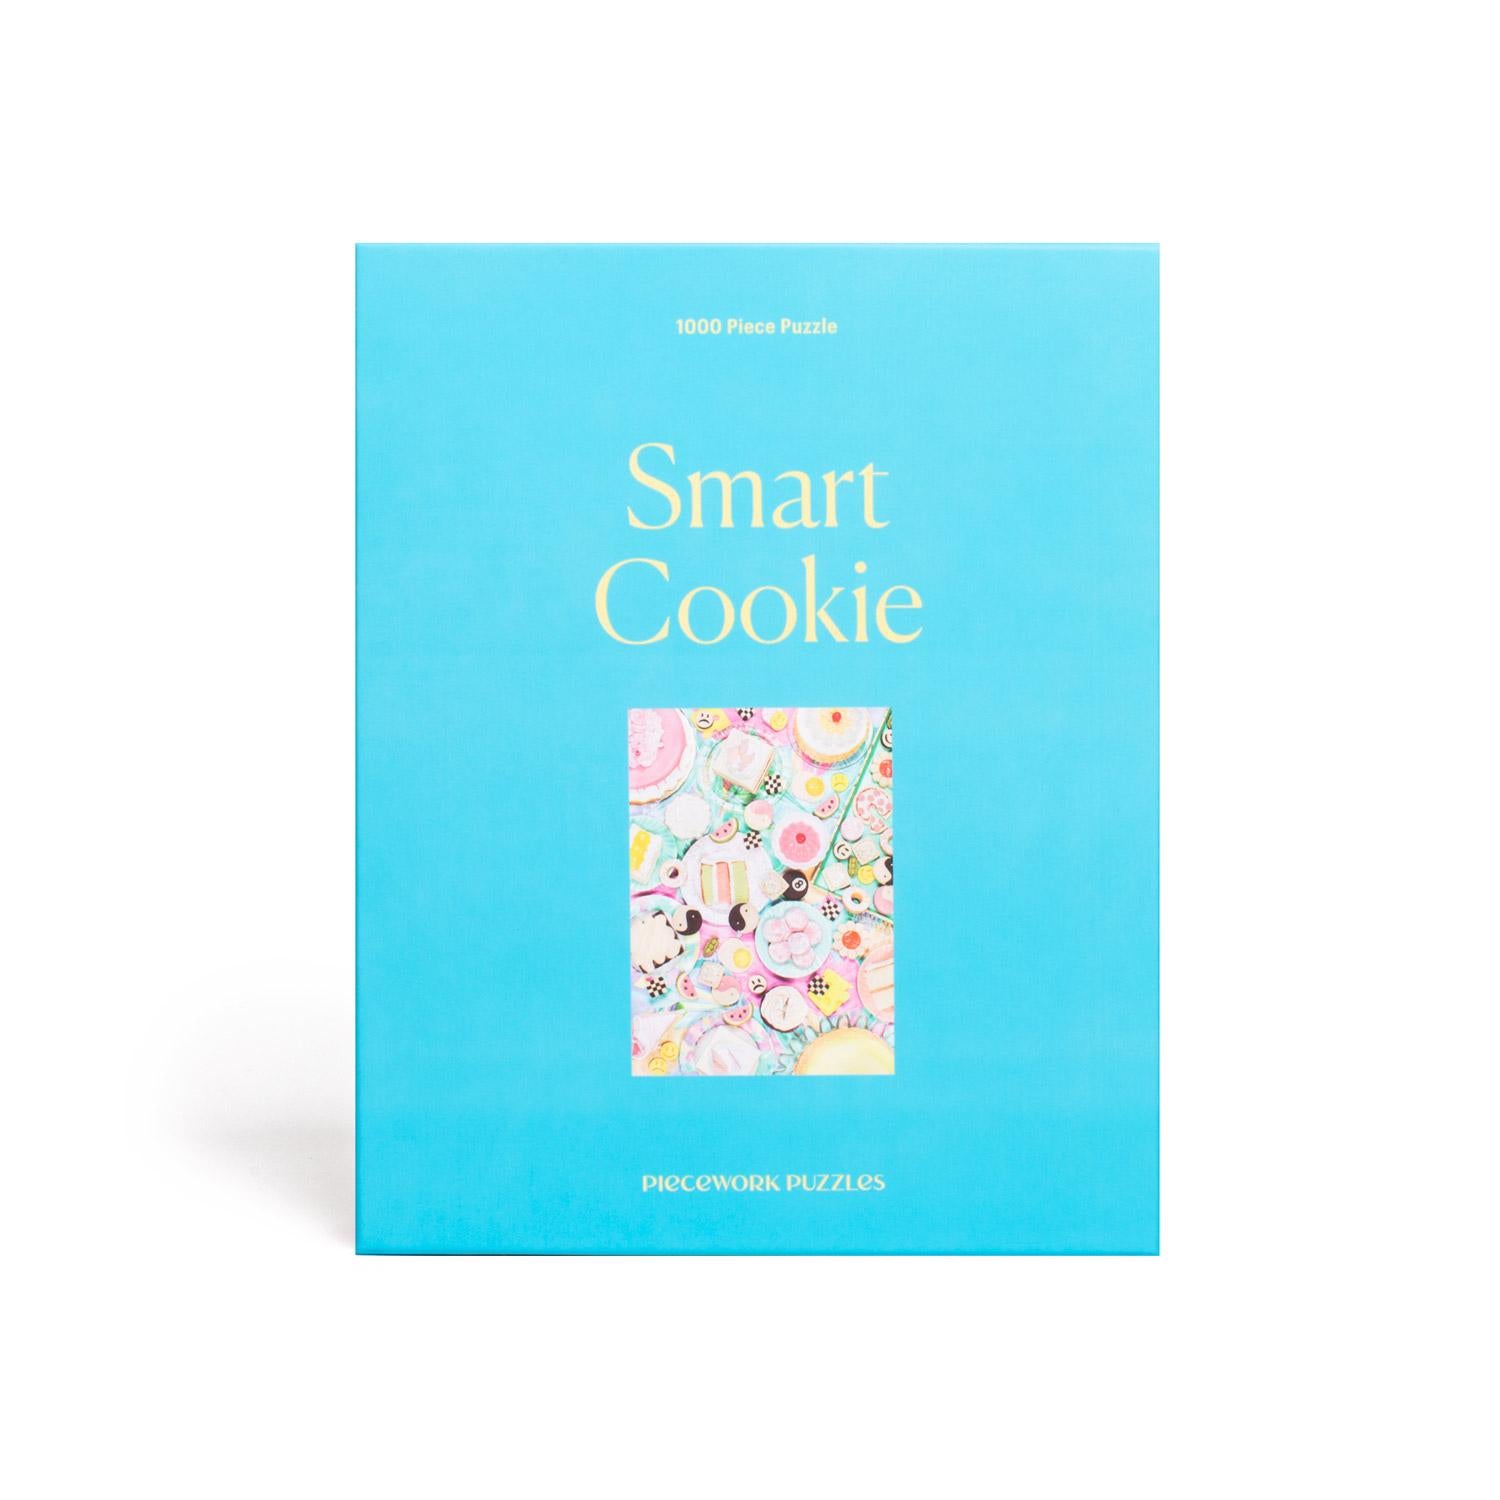 Piecework Puzzles' Smart Cookie 1000 Piece Puzzle